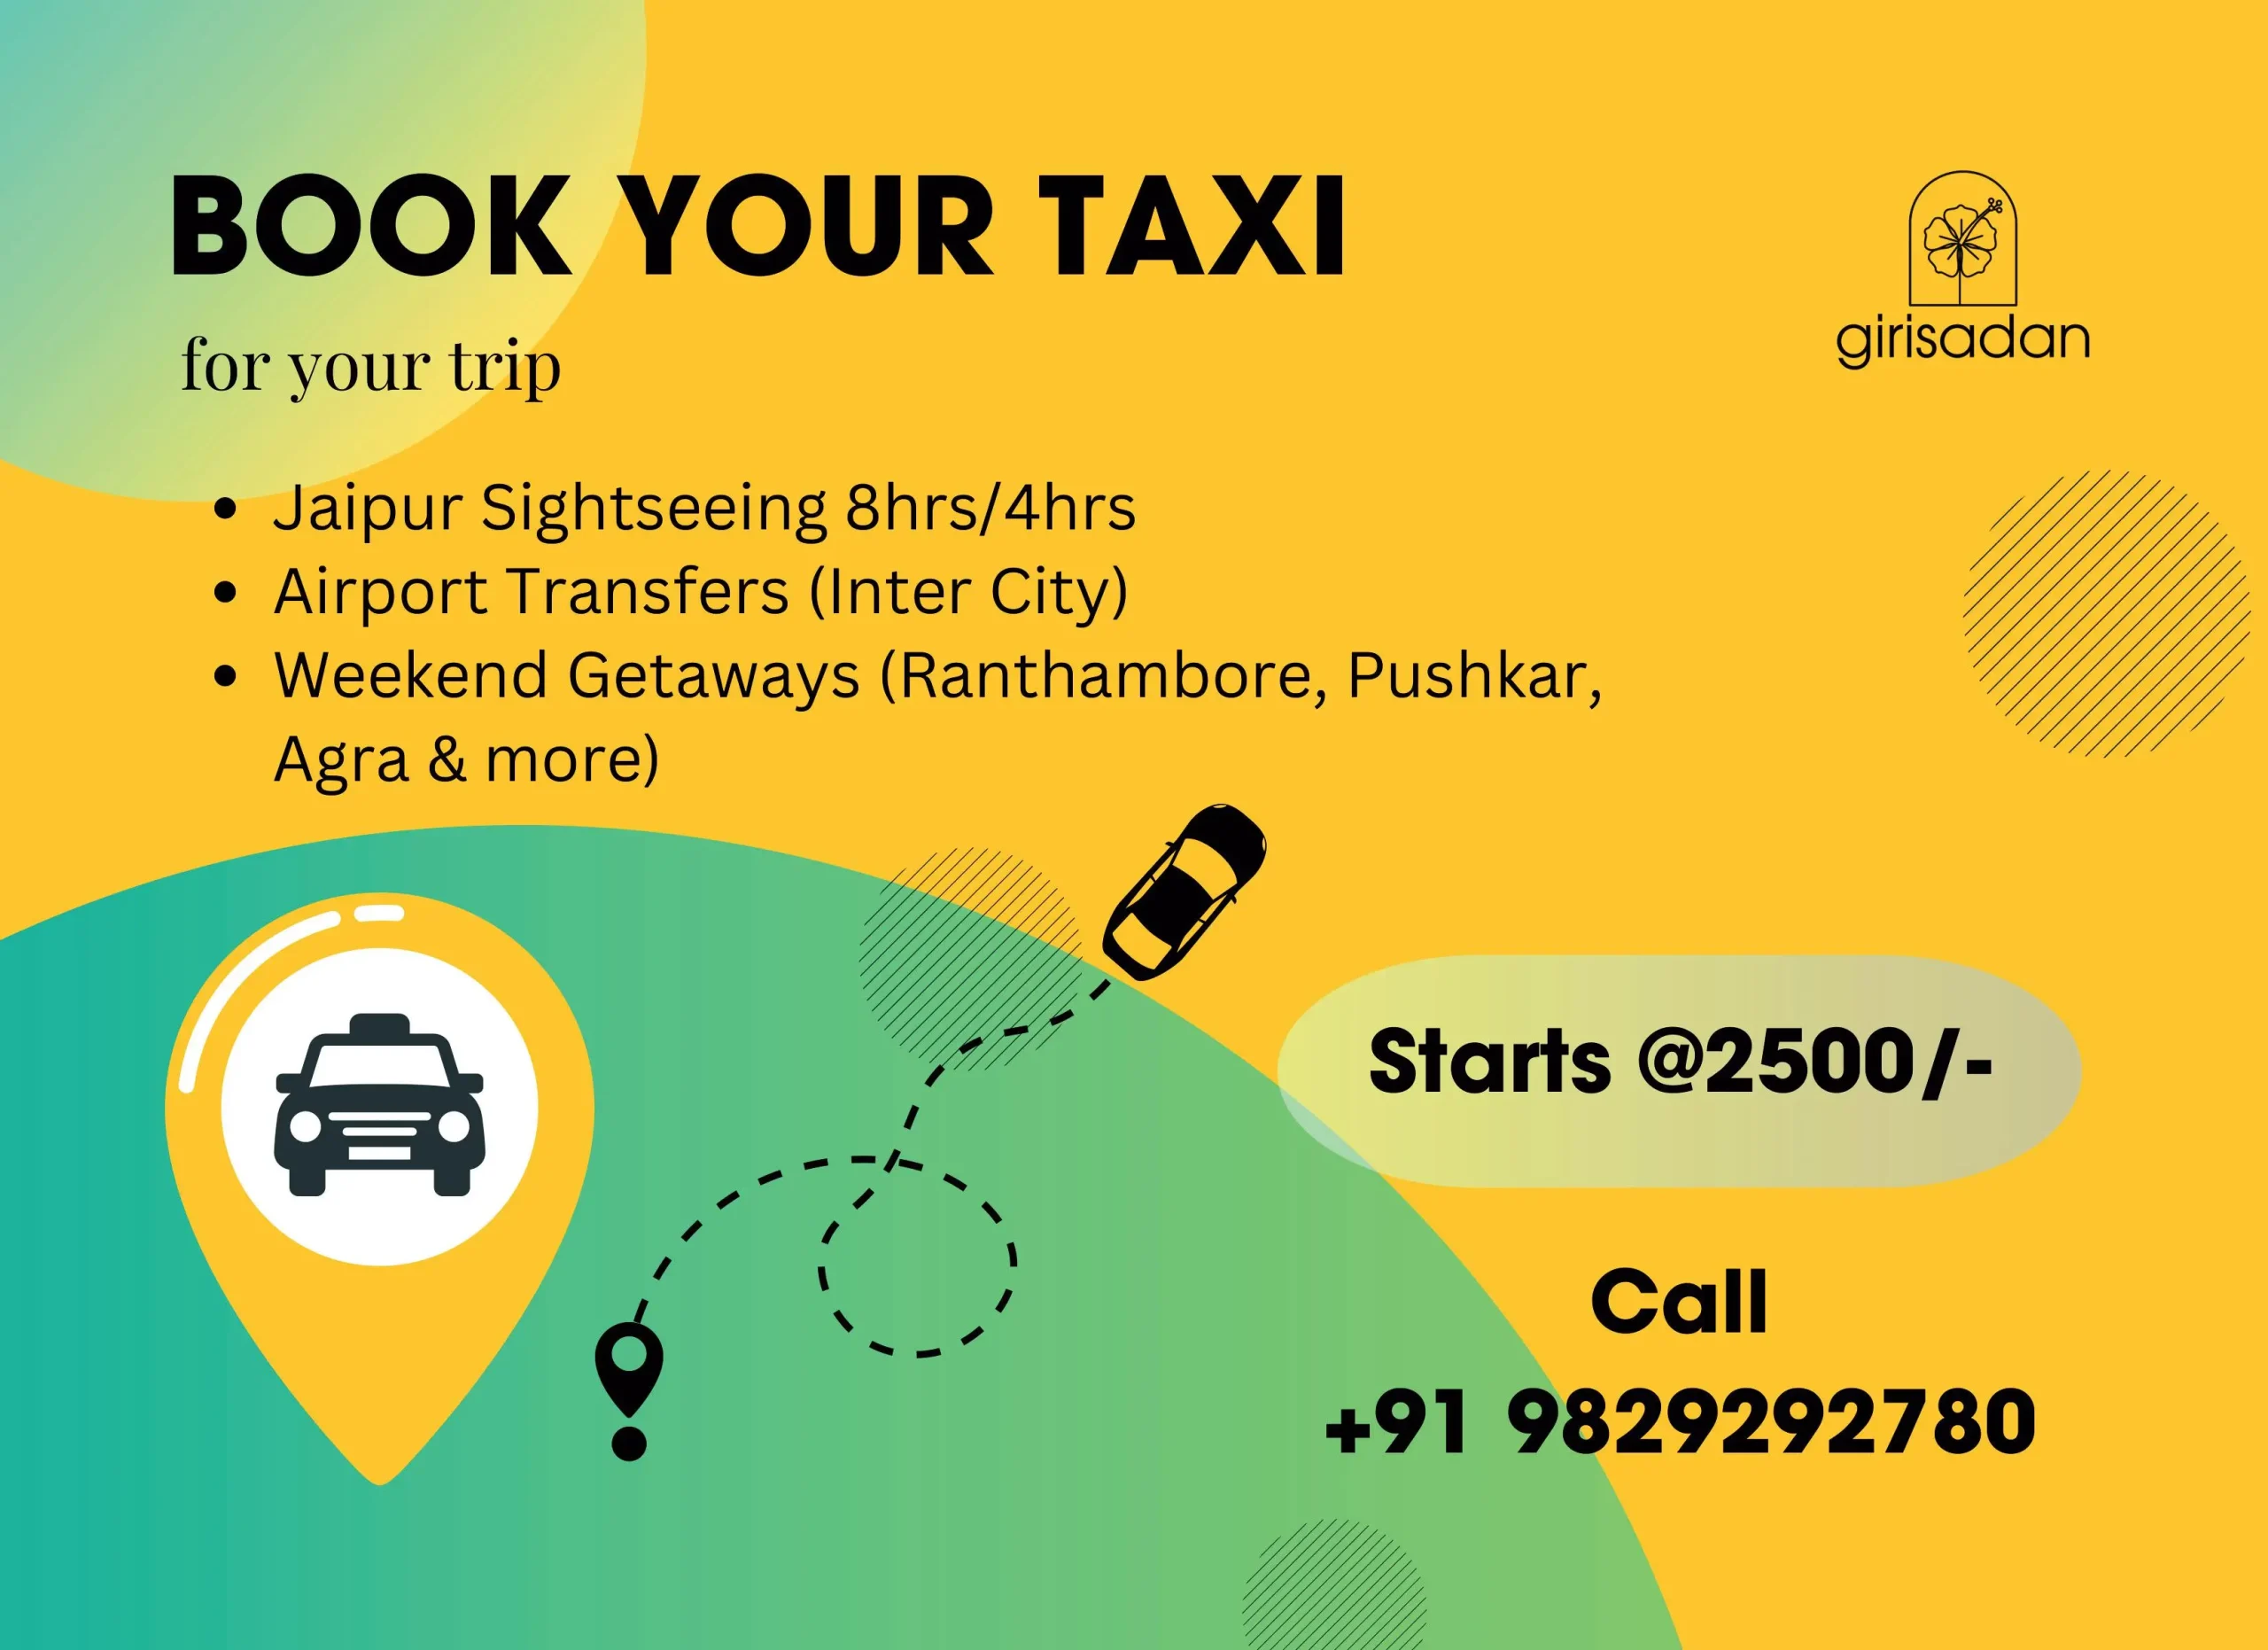 Book your taxi with Girisadan